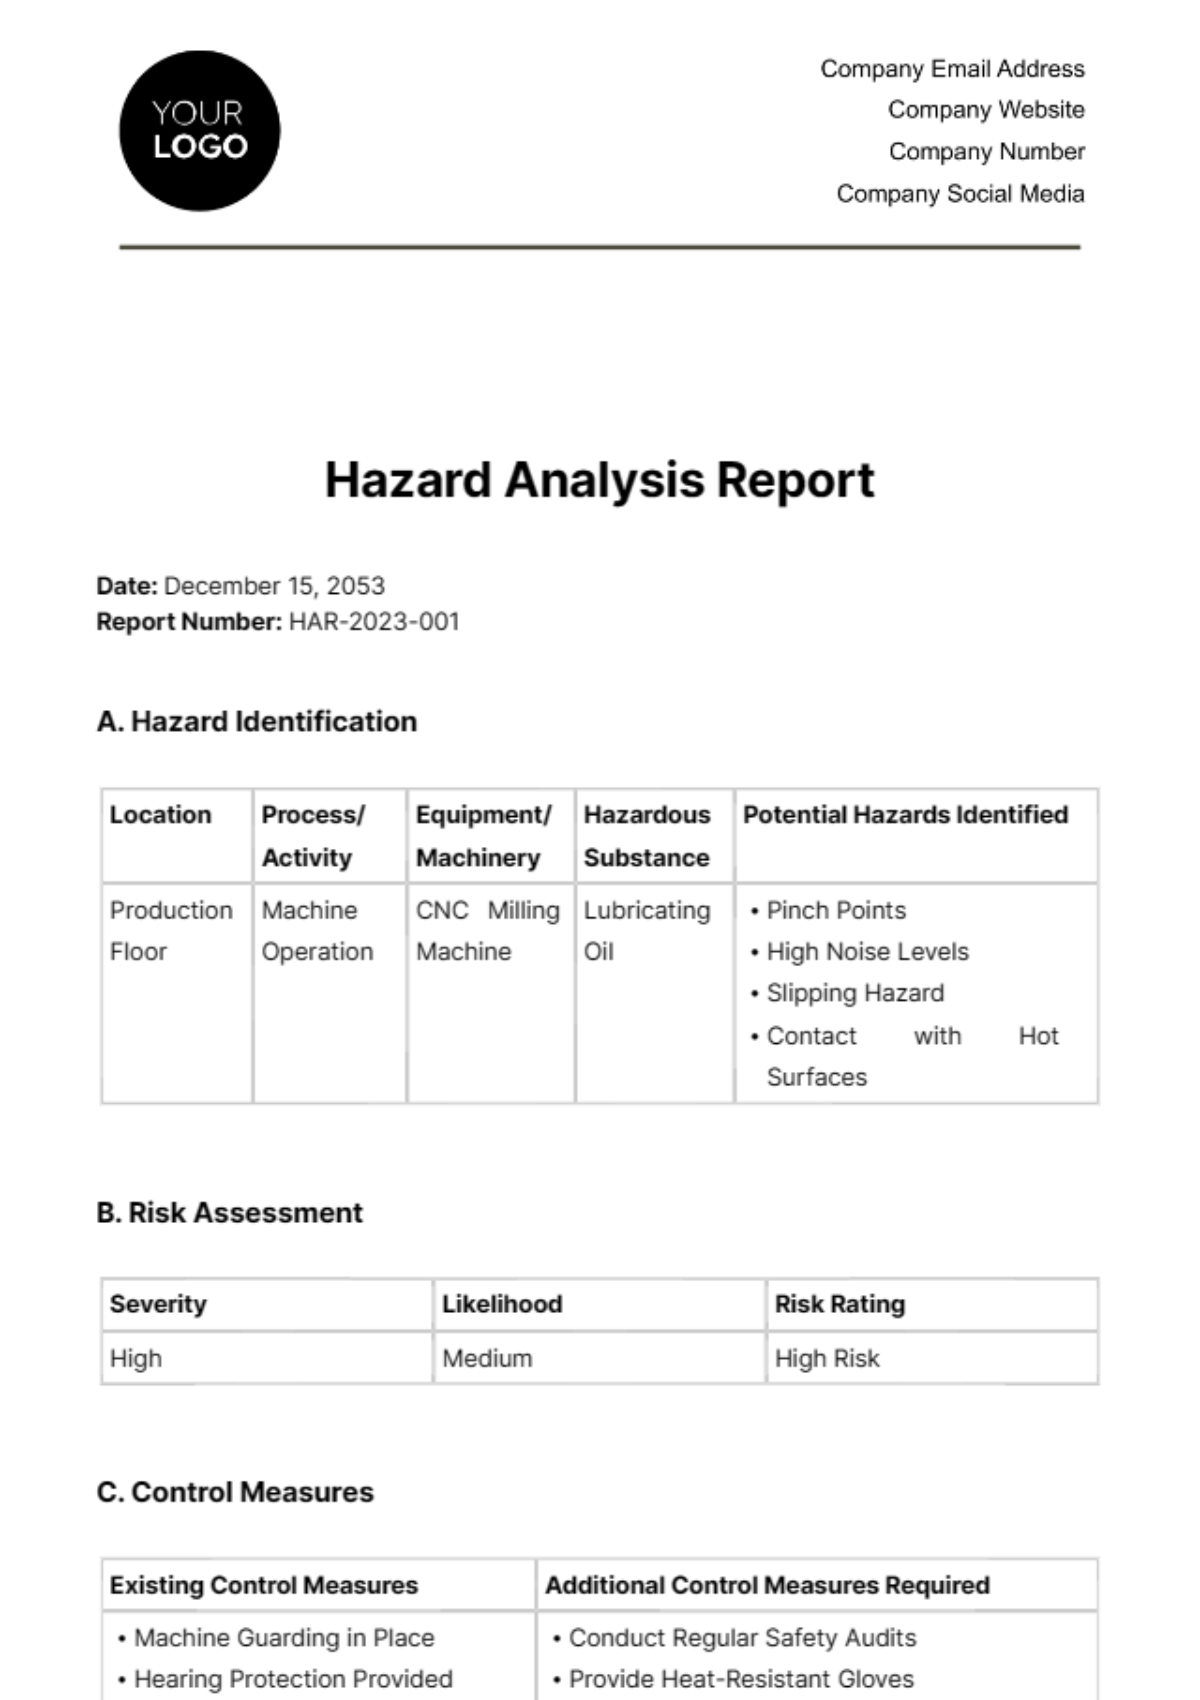 Hazard Analysis Report Template